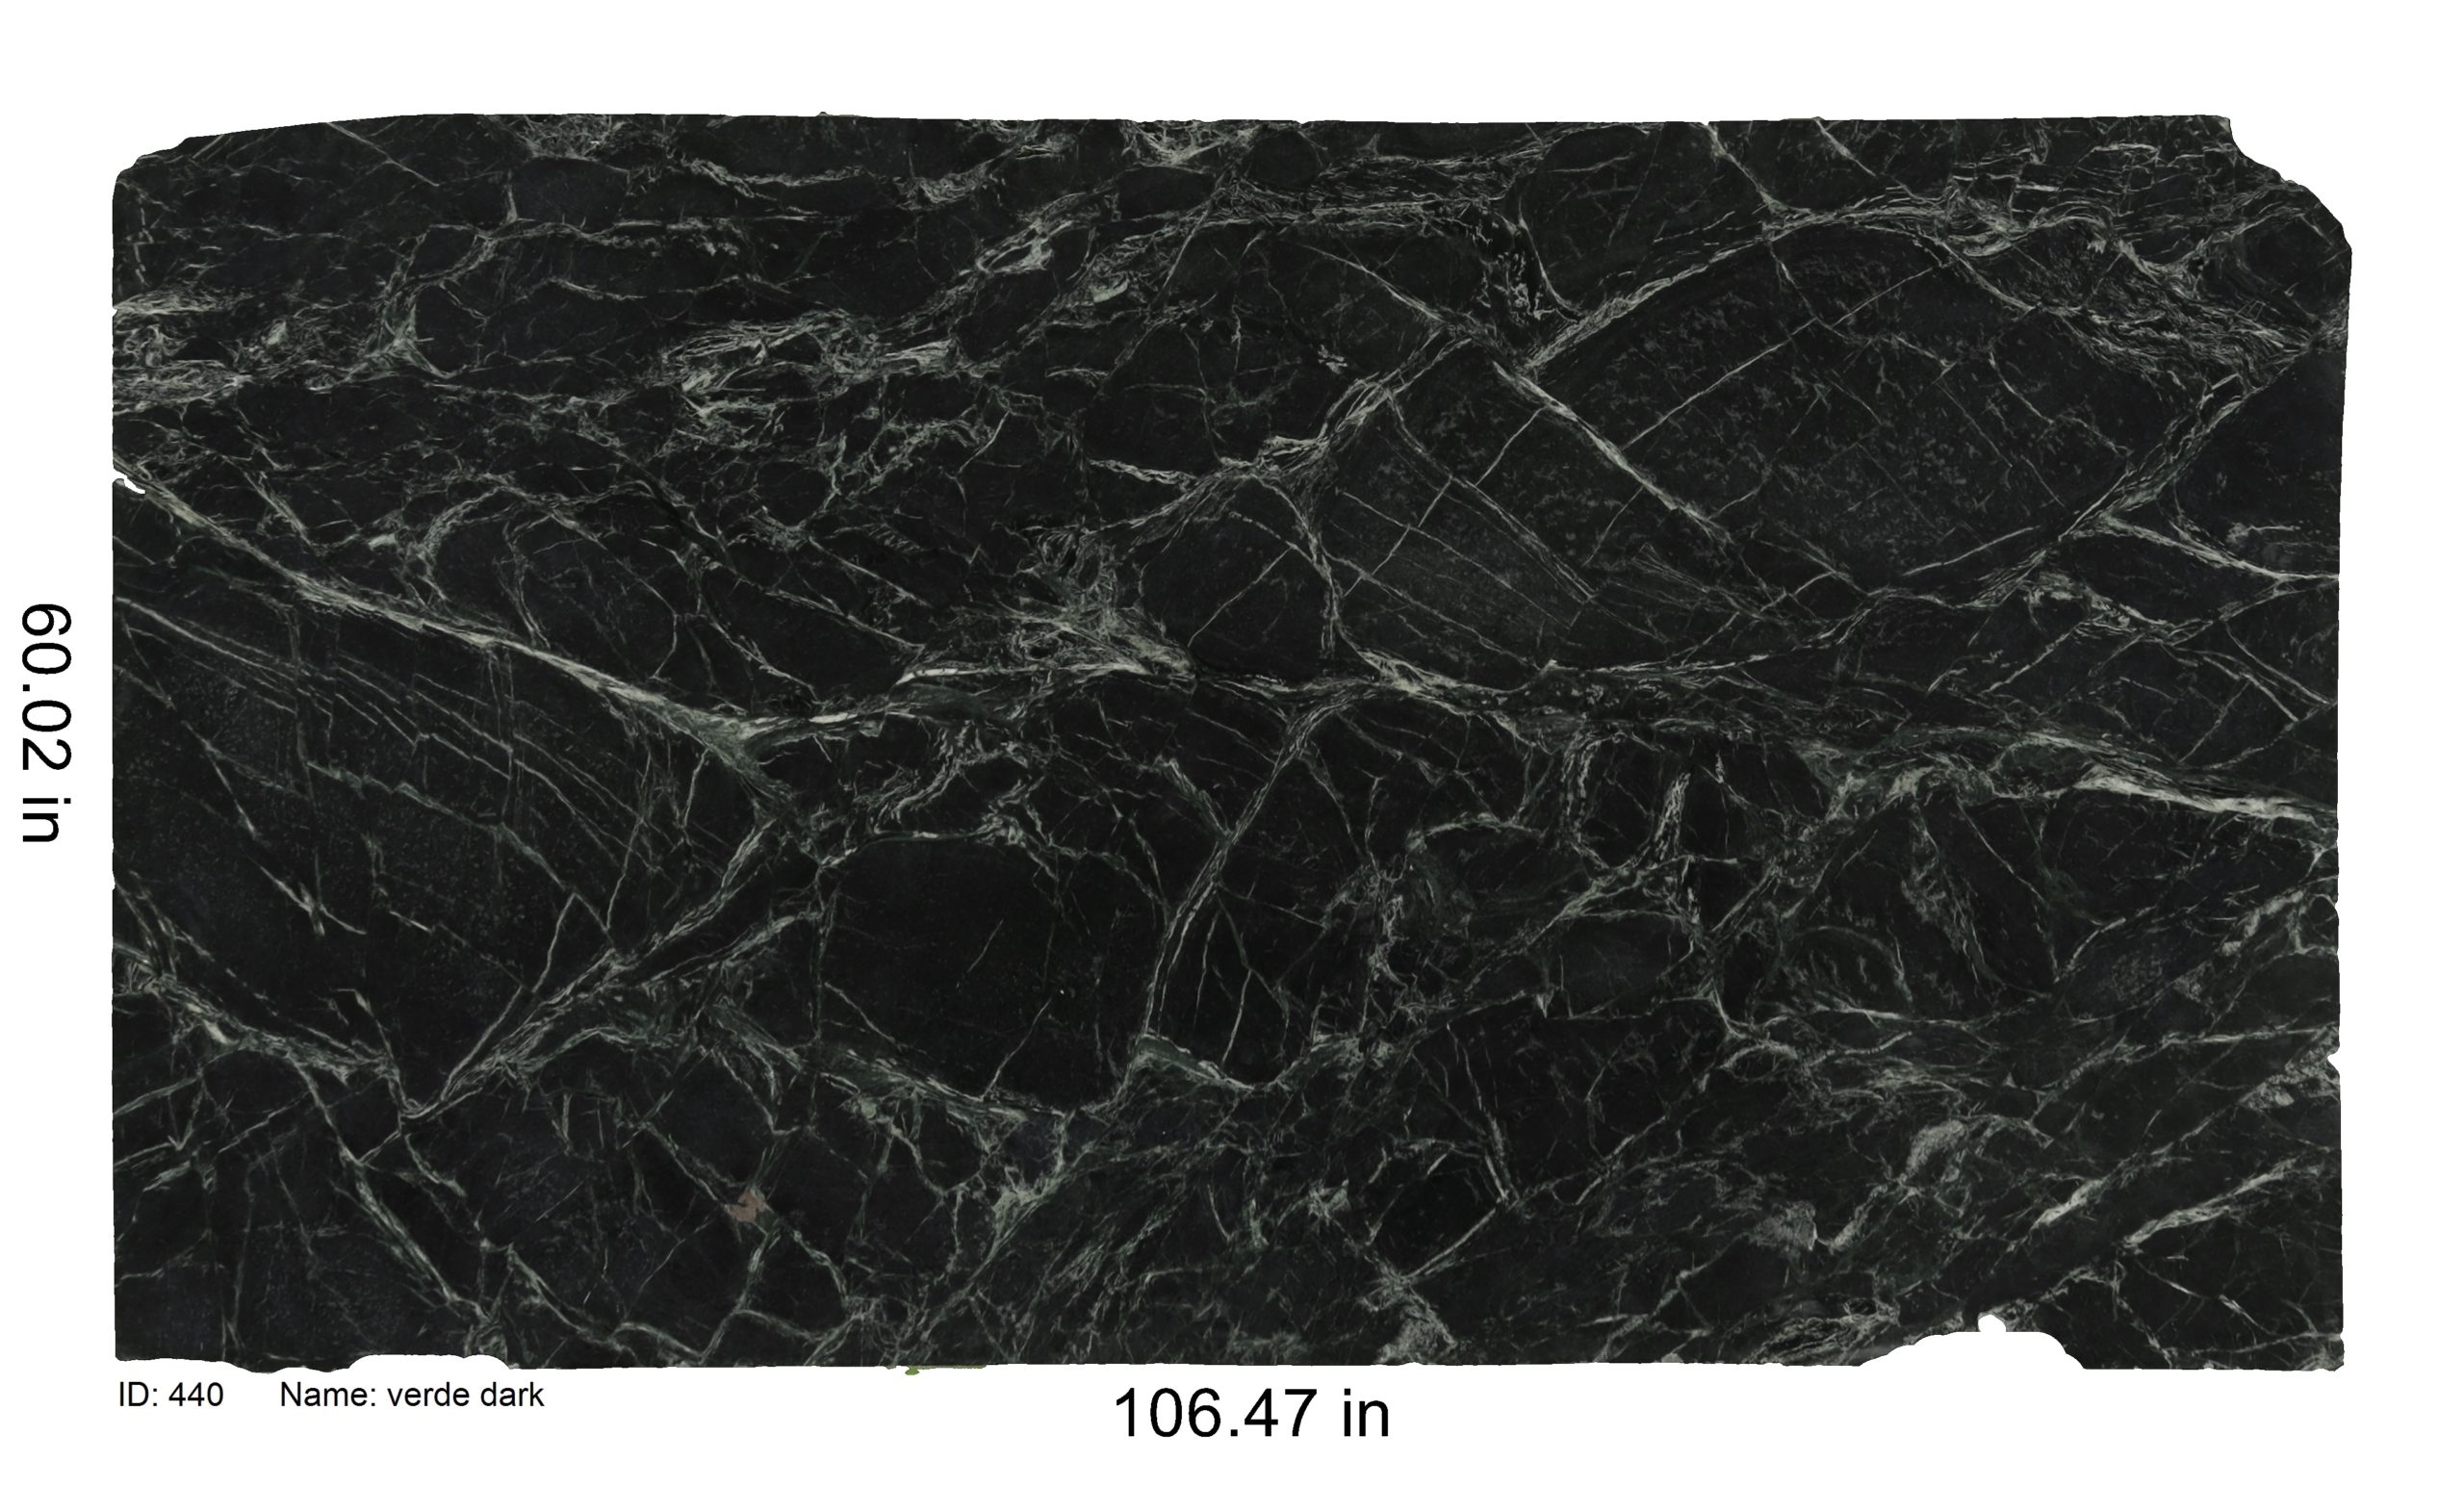 Dark Grey Marble With Grey Veining<br />
ID: 440<br />
Name: Verde Dark<br />
Size: 60.02x106.47